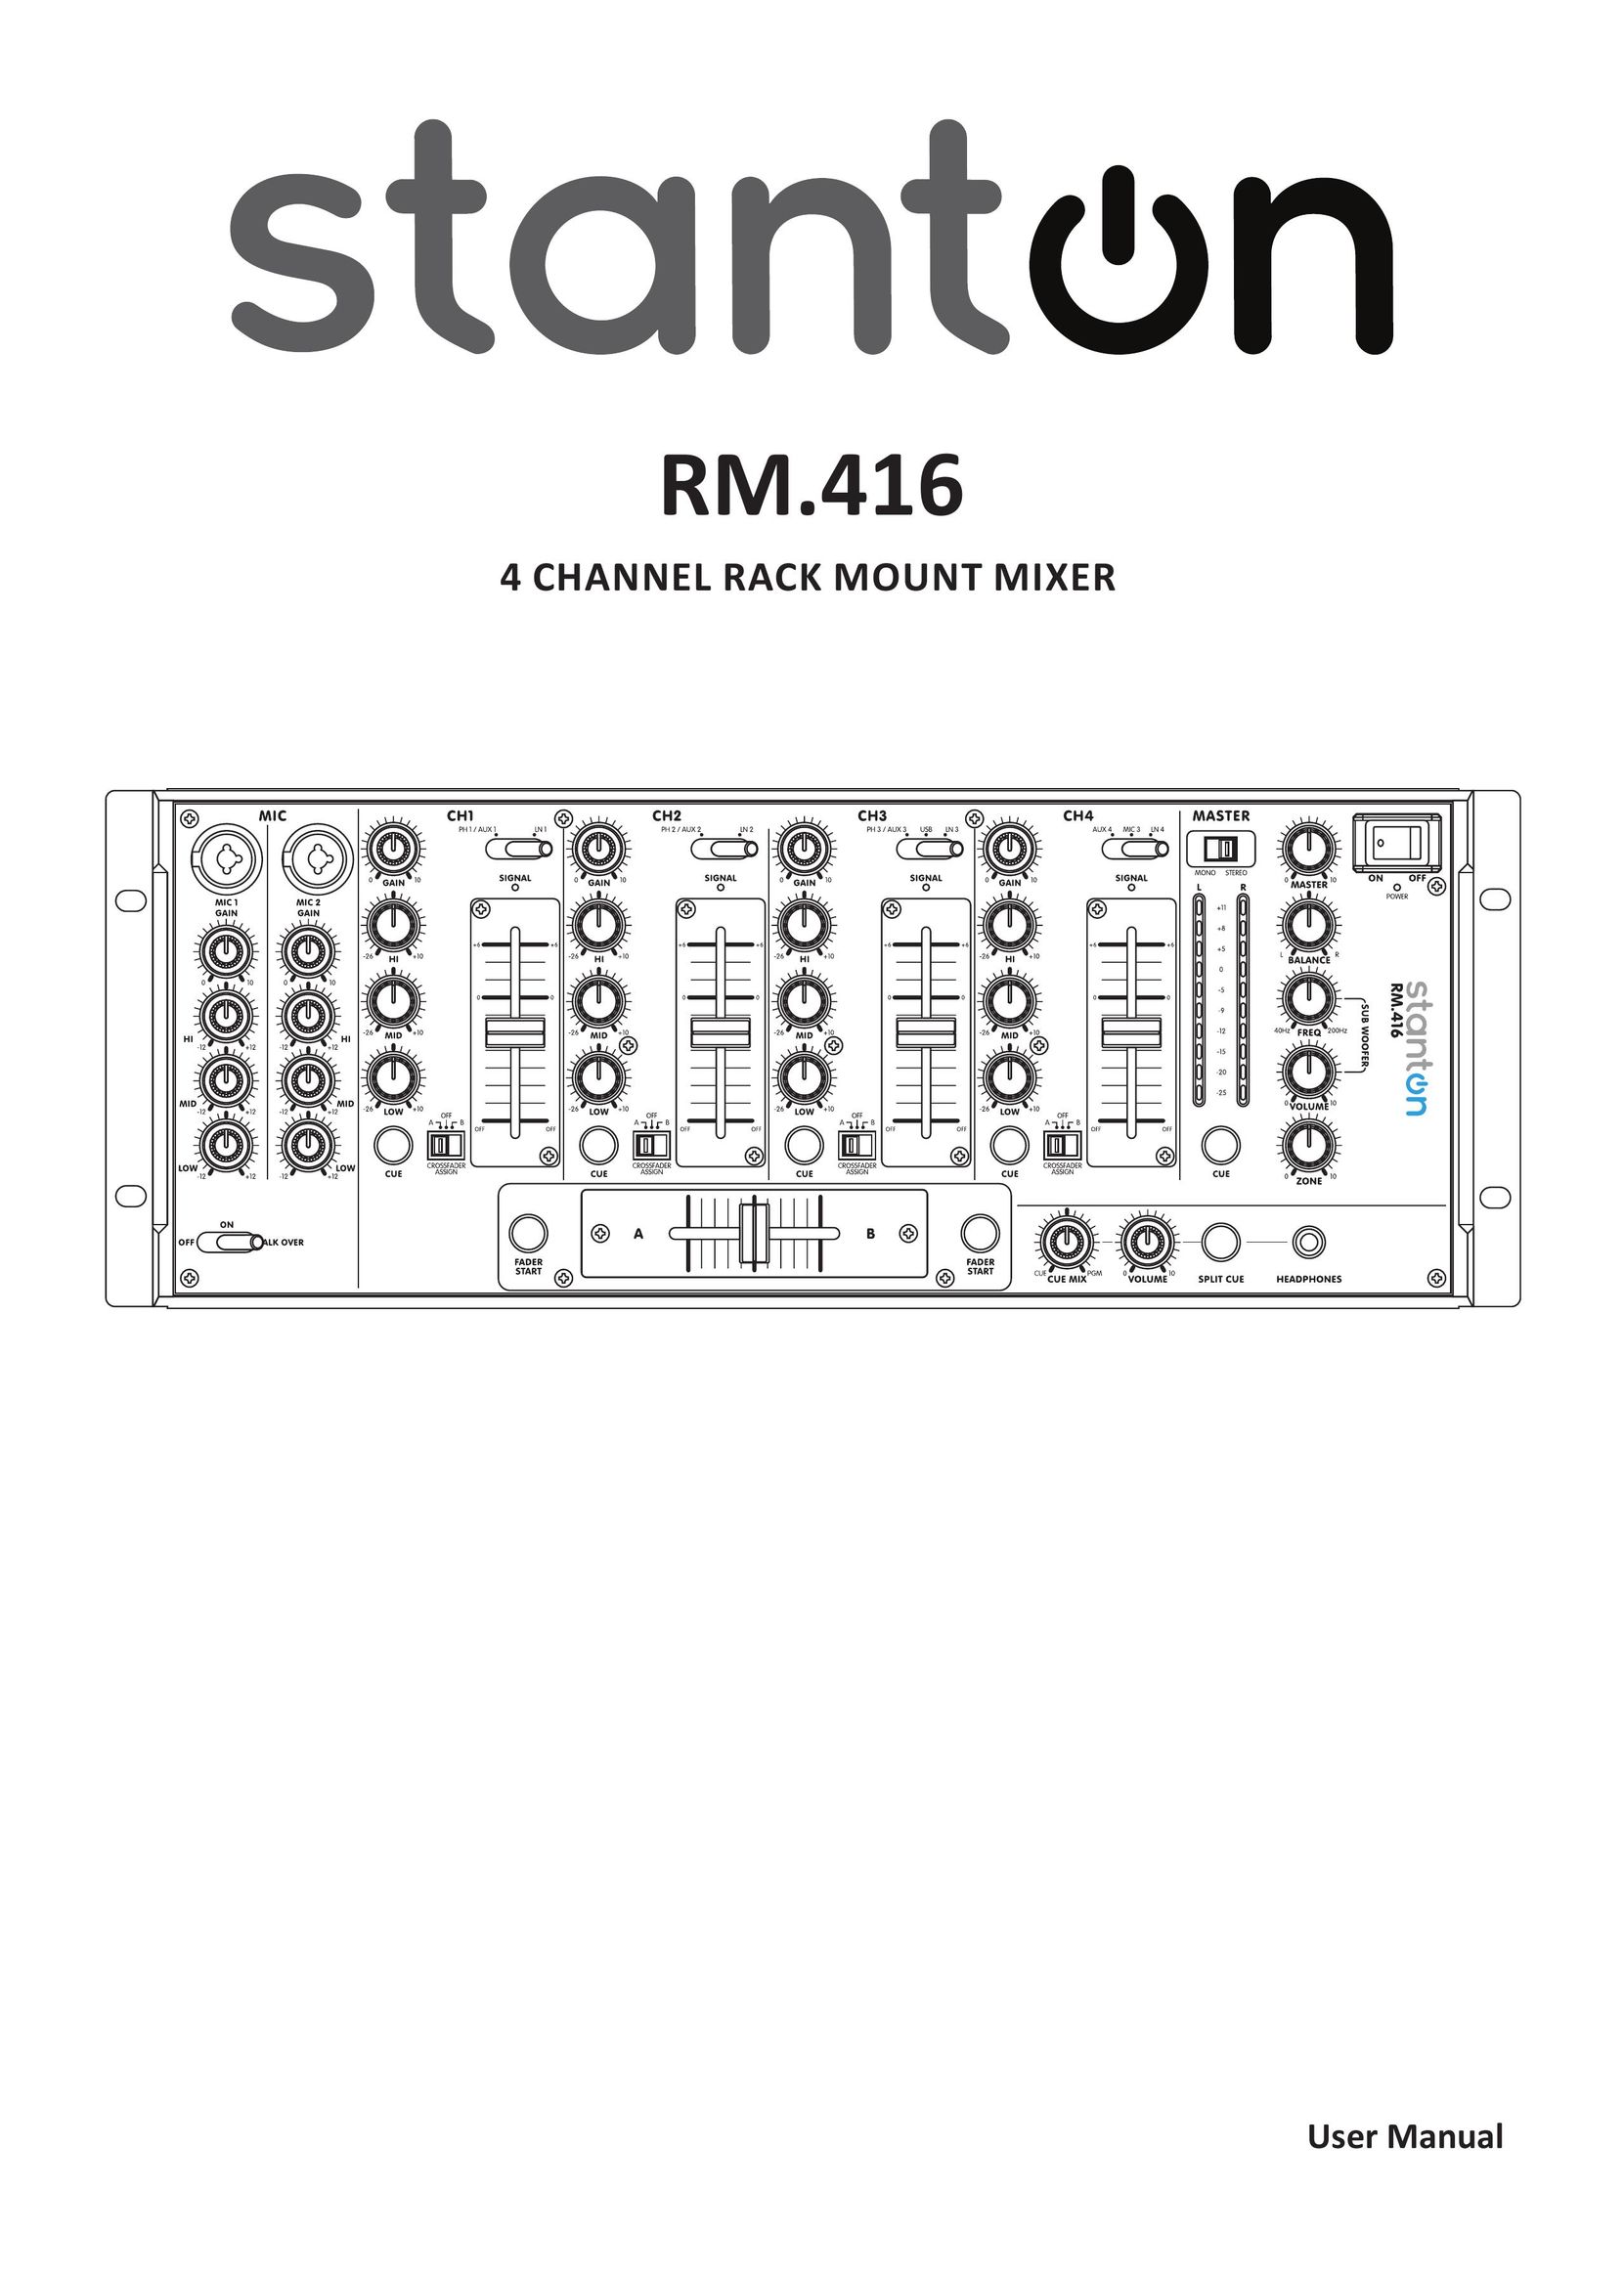 Stanton RM.416 Mixer User Manual